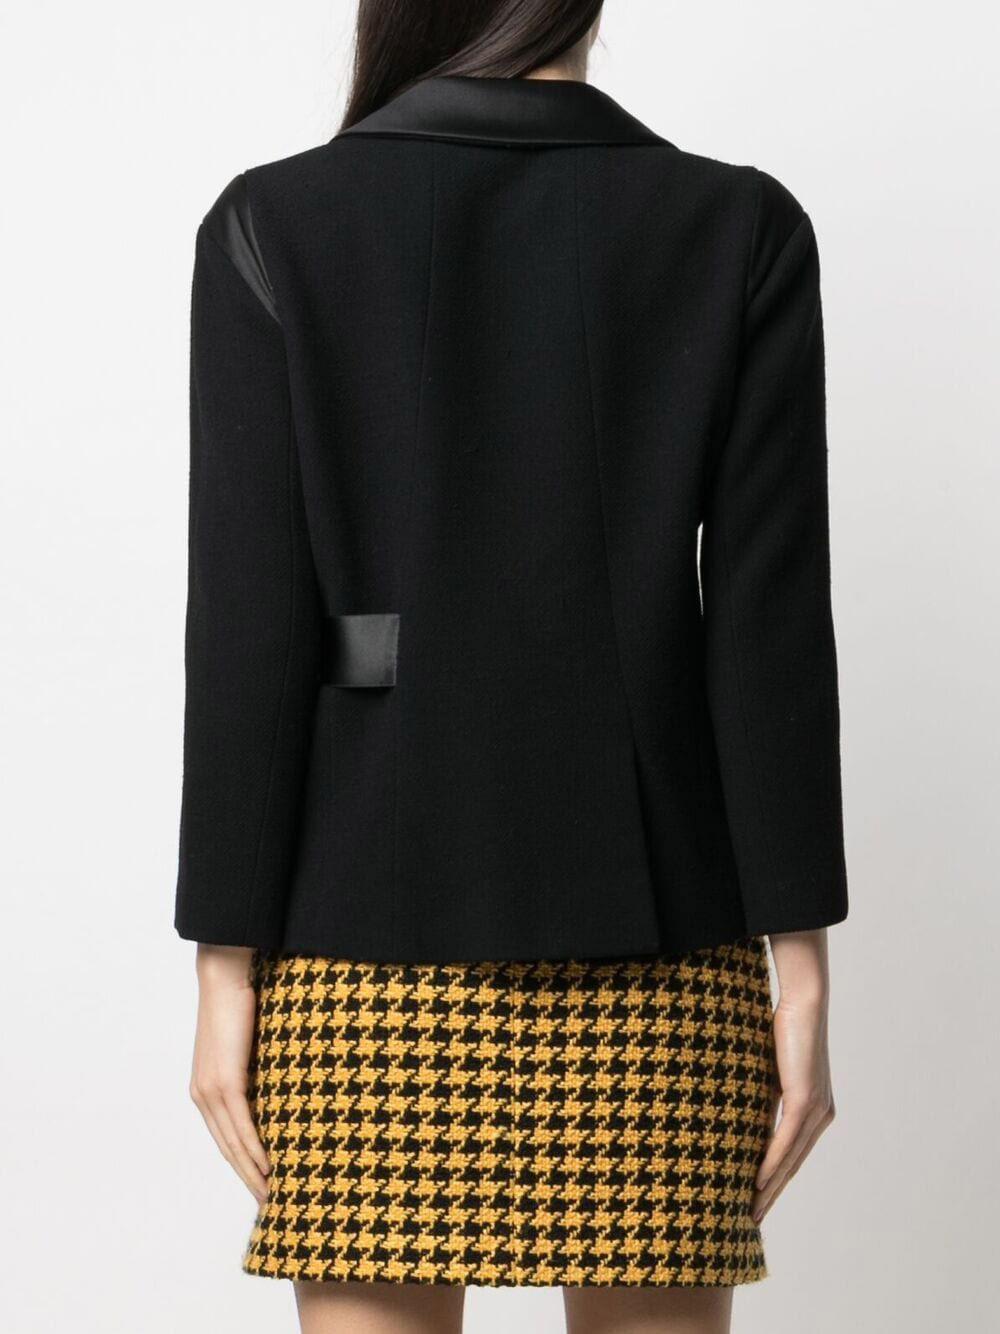 Chanel New Paris / London Runway Veste en tweed noir en vente 2